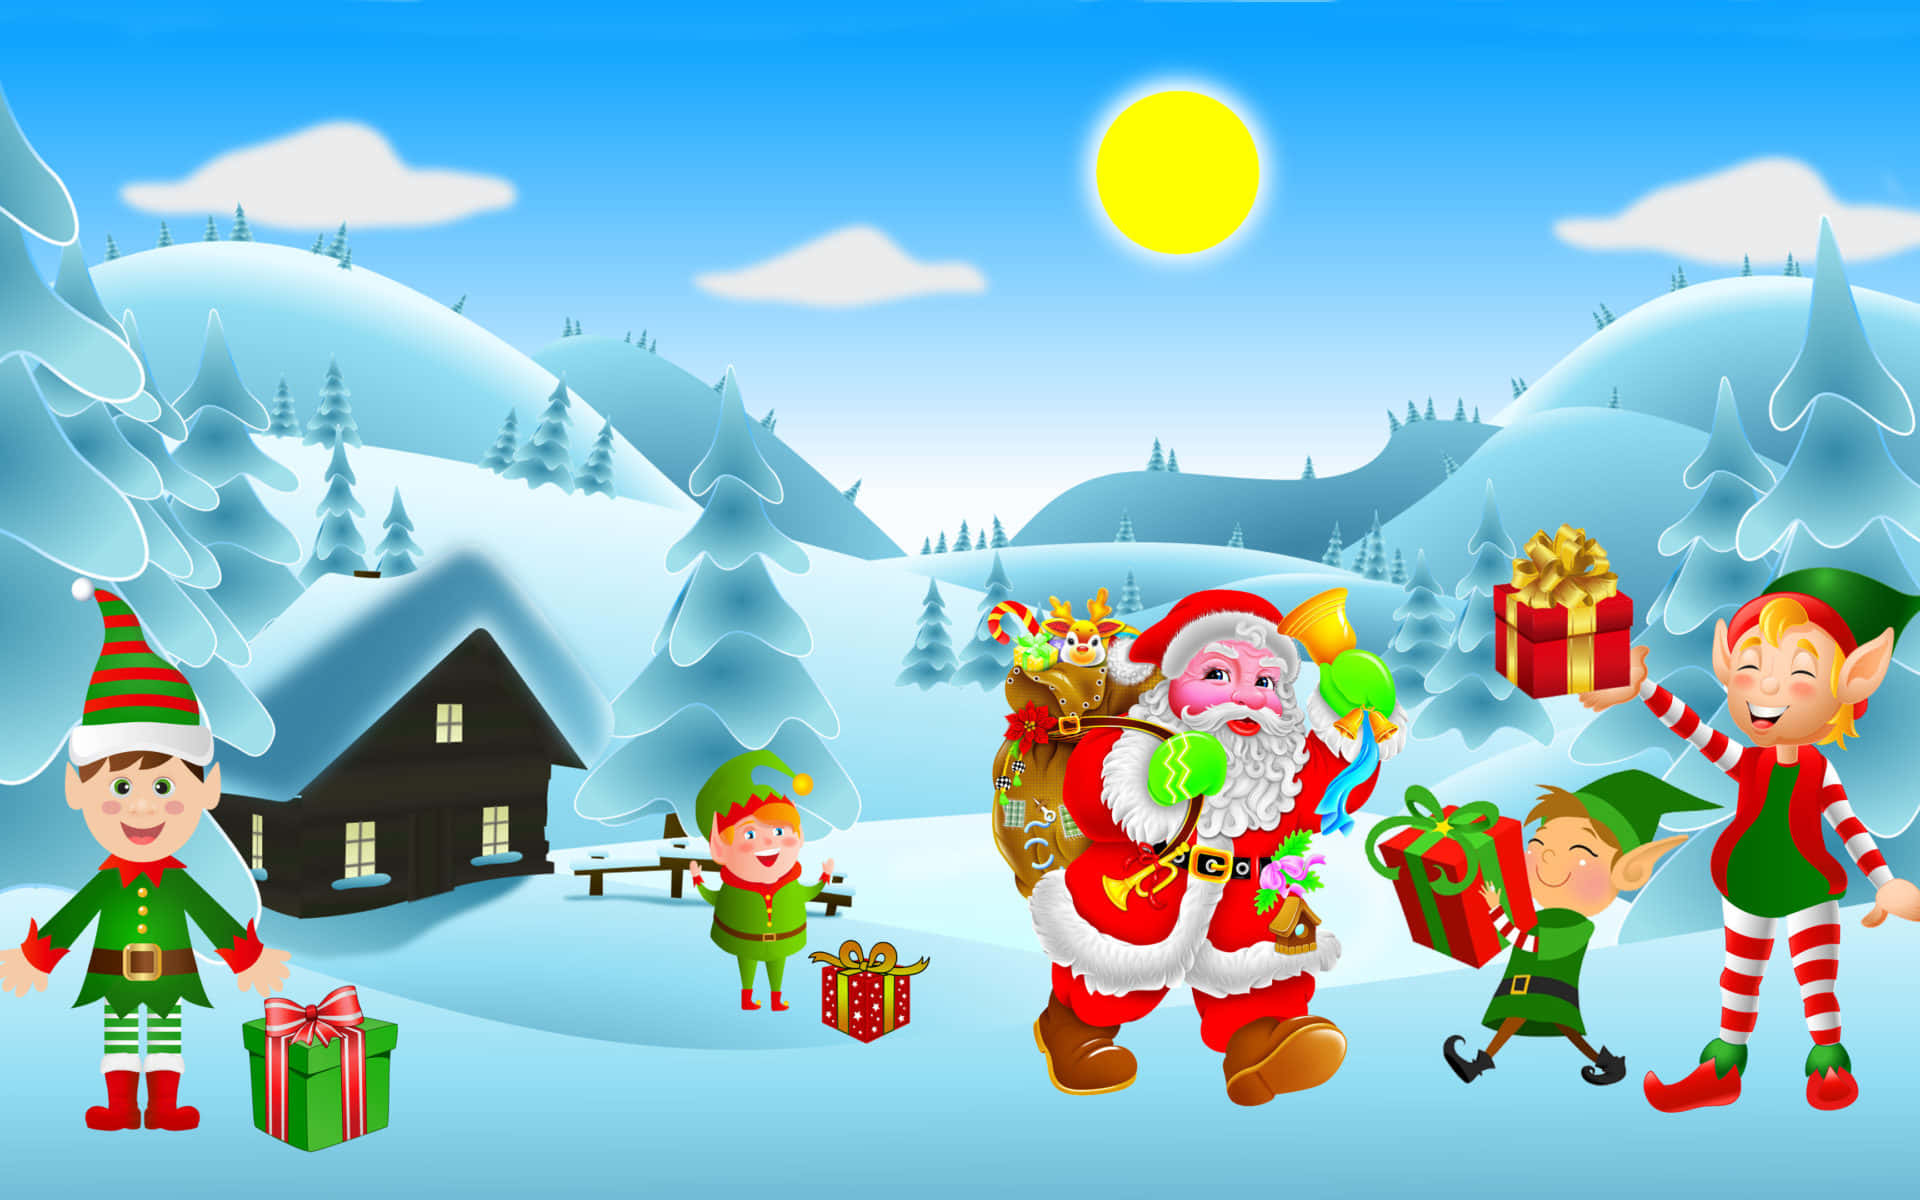 Enjoy a Magical and Festive Christmas Winter Wallpaper